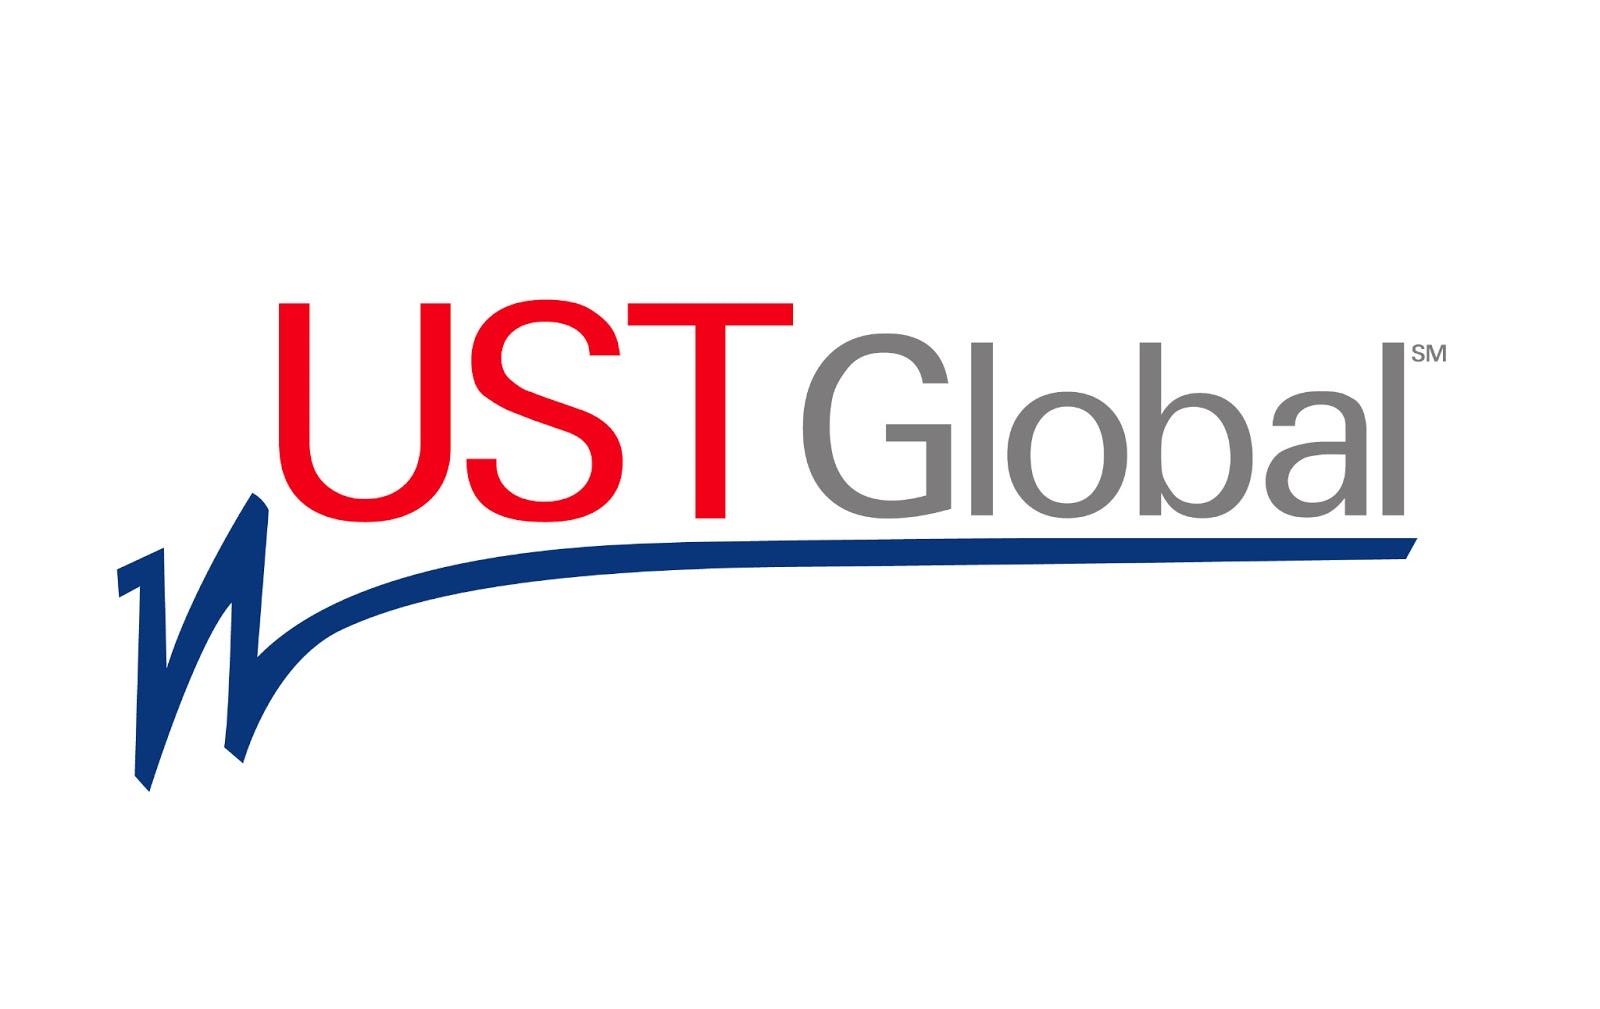 Global HD Logo - ust-global-logo - Merivis Foundation